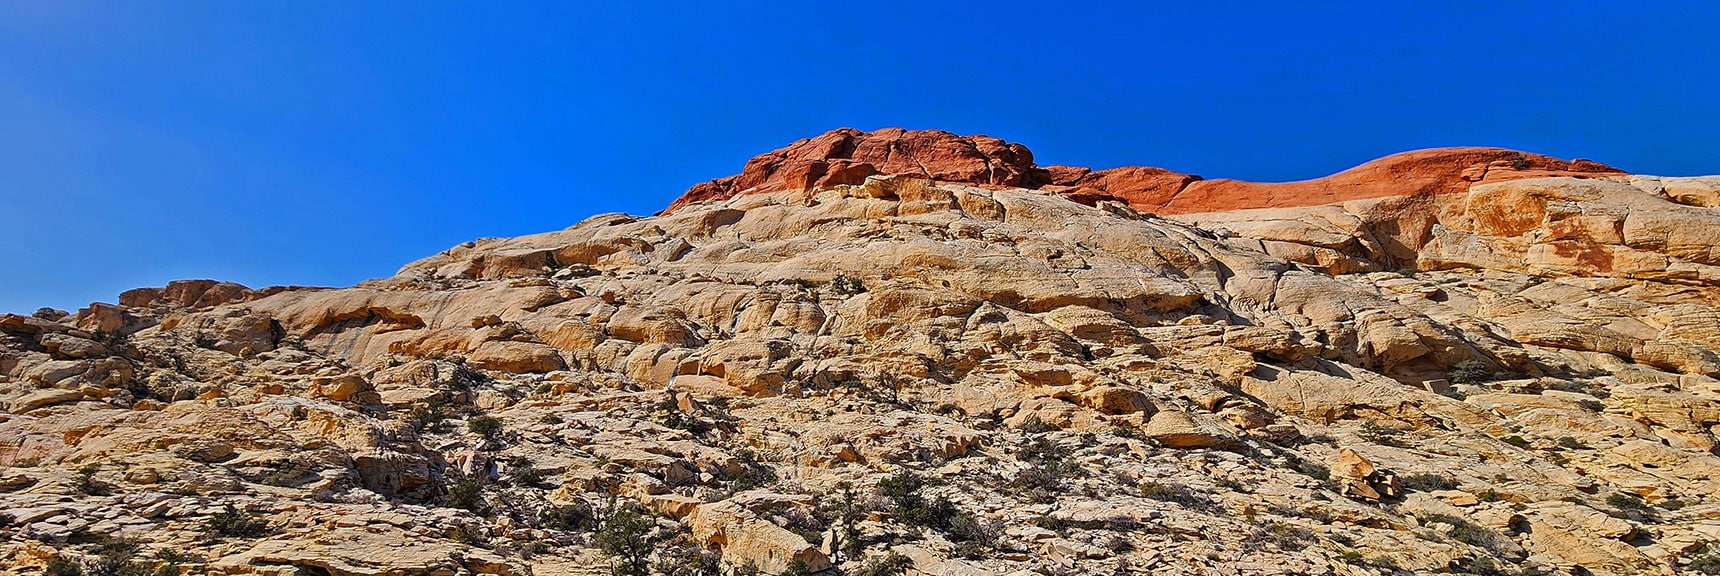 Jurassic Era Sandstone Peak Overlooking Red Rock Canyon, Aka "Little Turtlehead" | Red Cap Summit | Calico Basin to La Madre Mountains Wilderness, Nevada